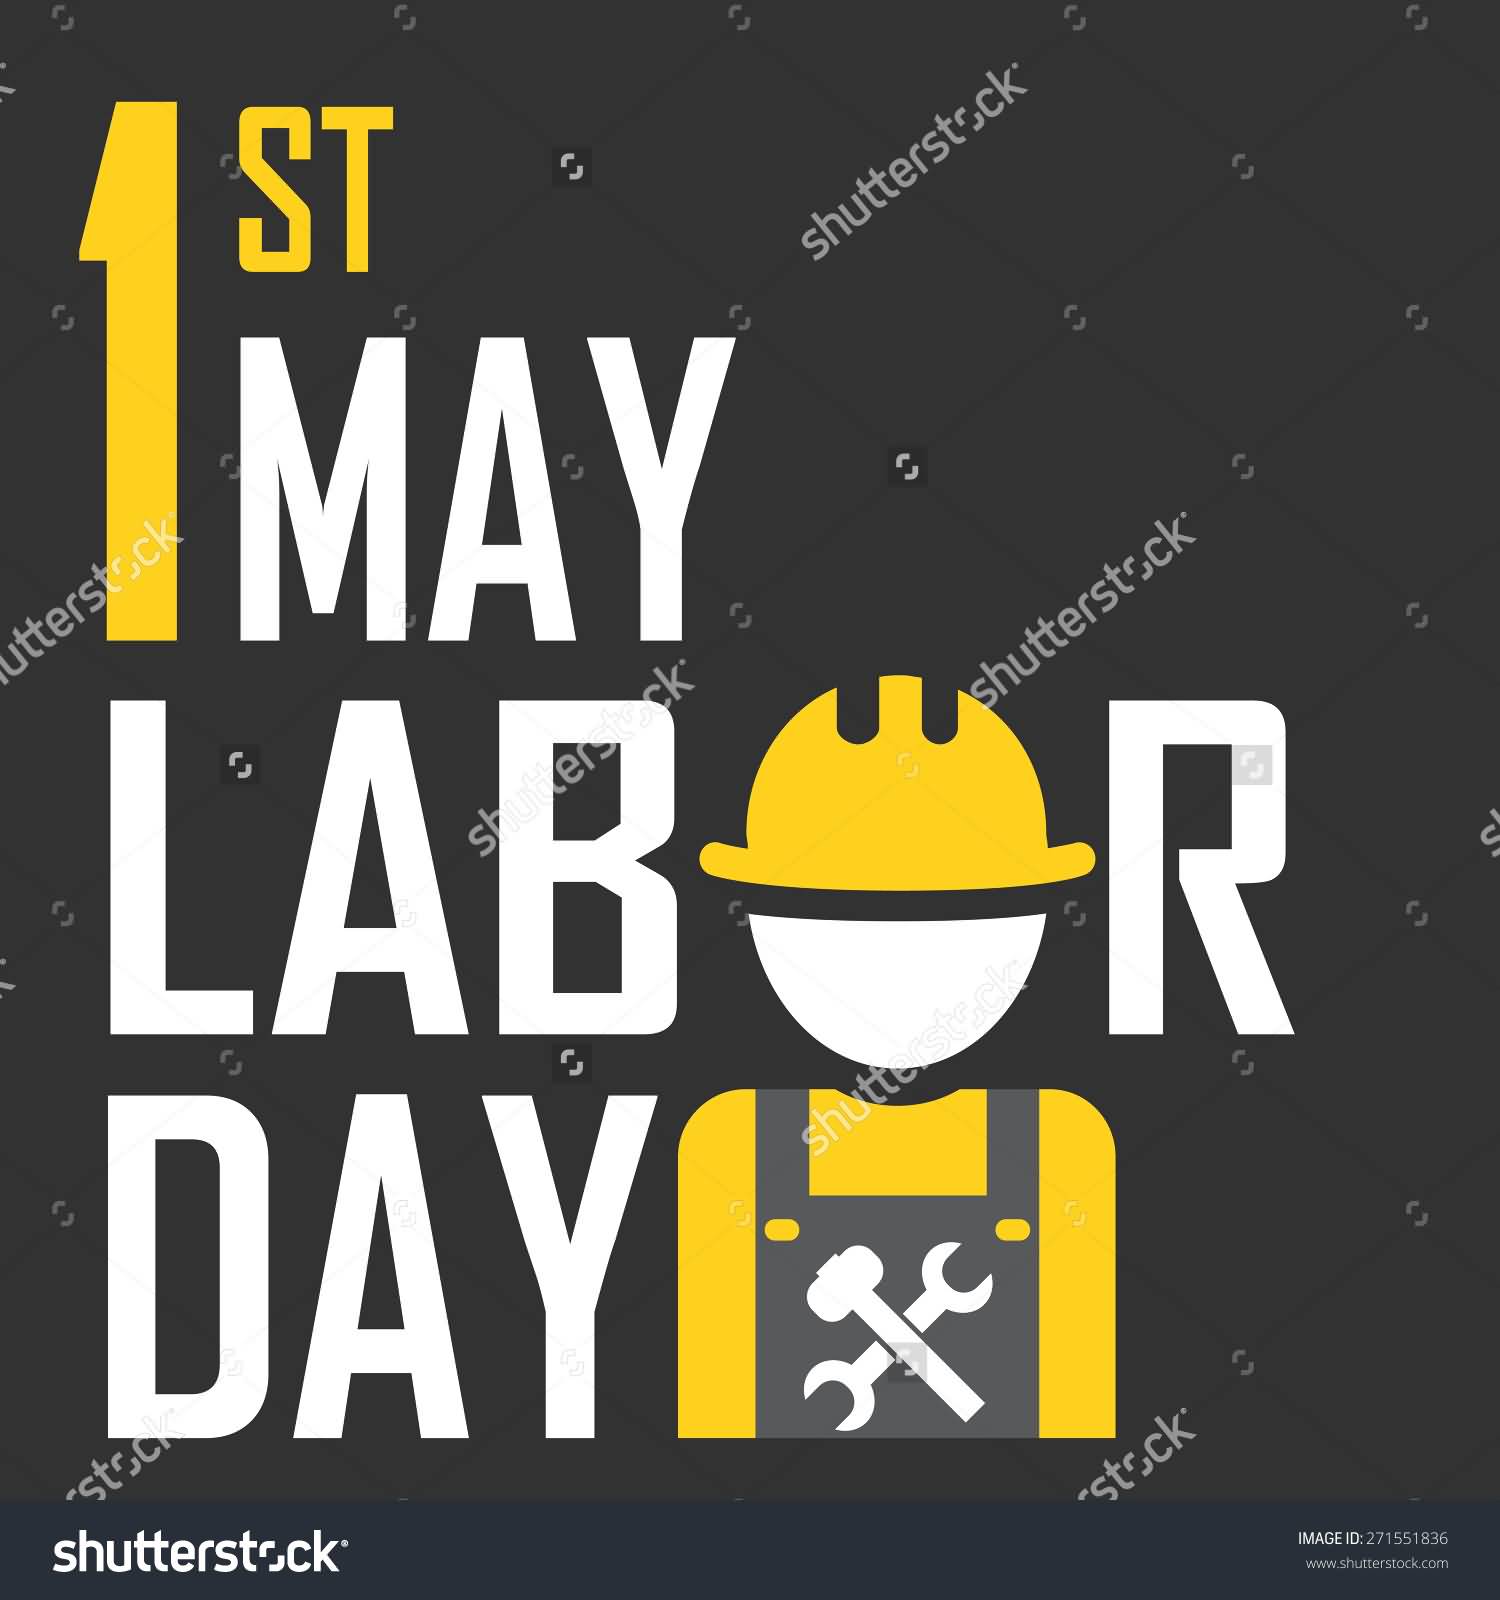 1st May Labor Day Illustration